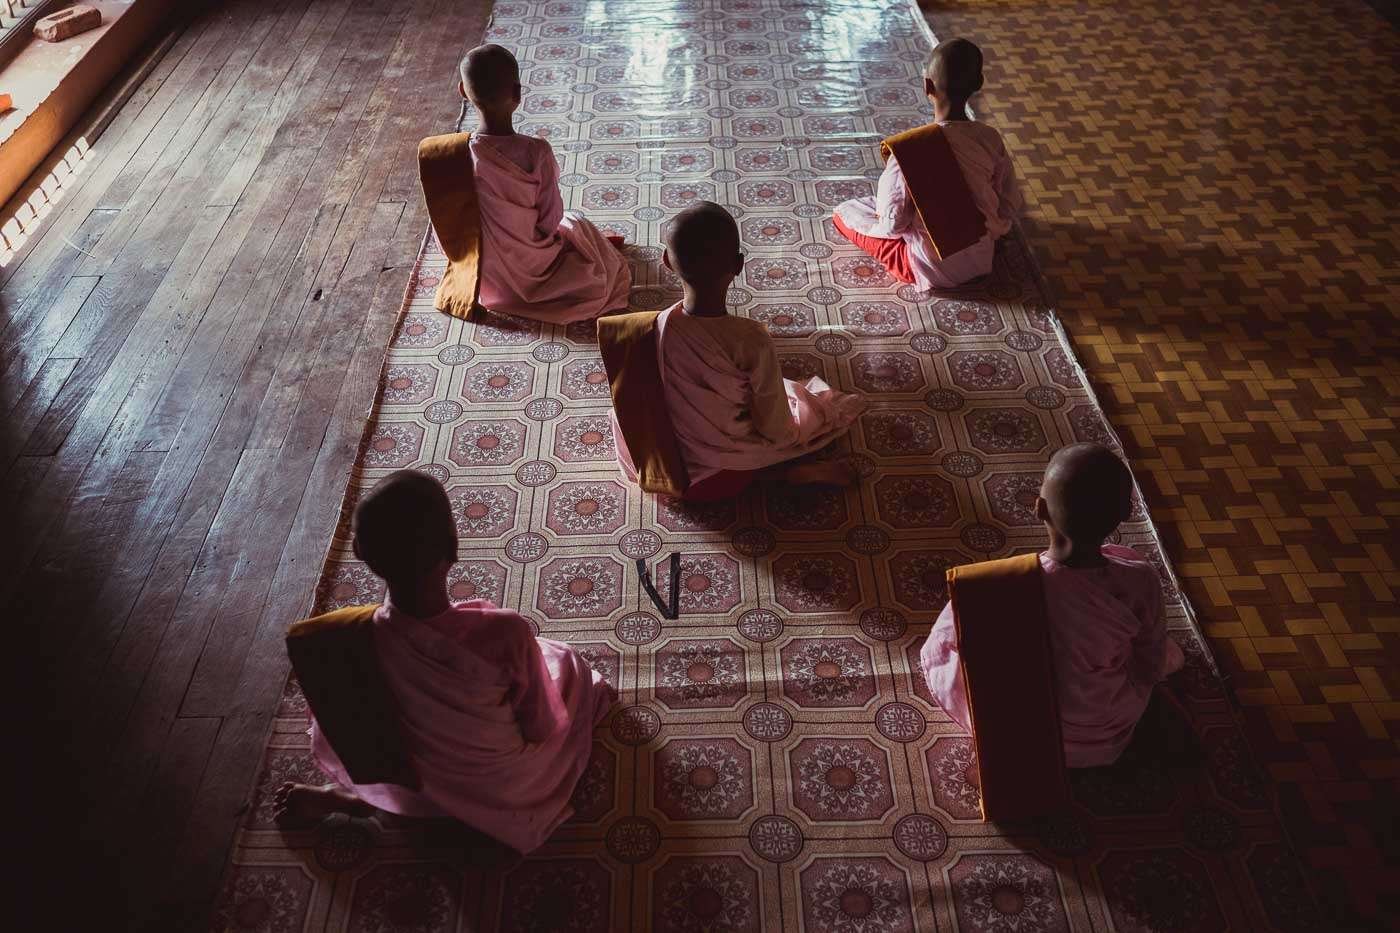 Burma photography tour: monastery section